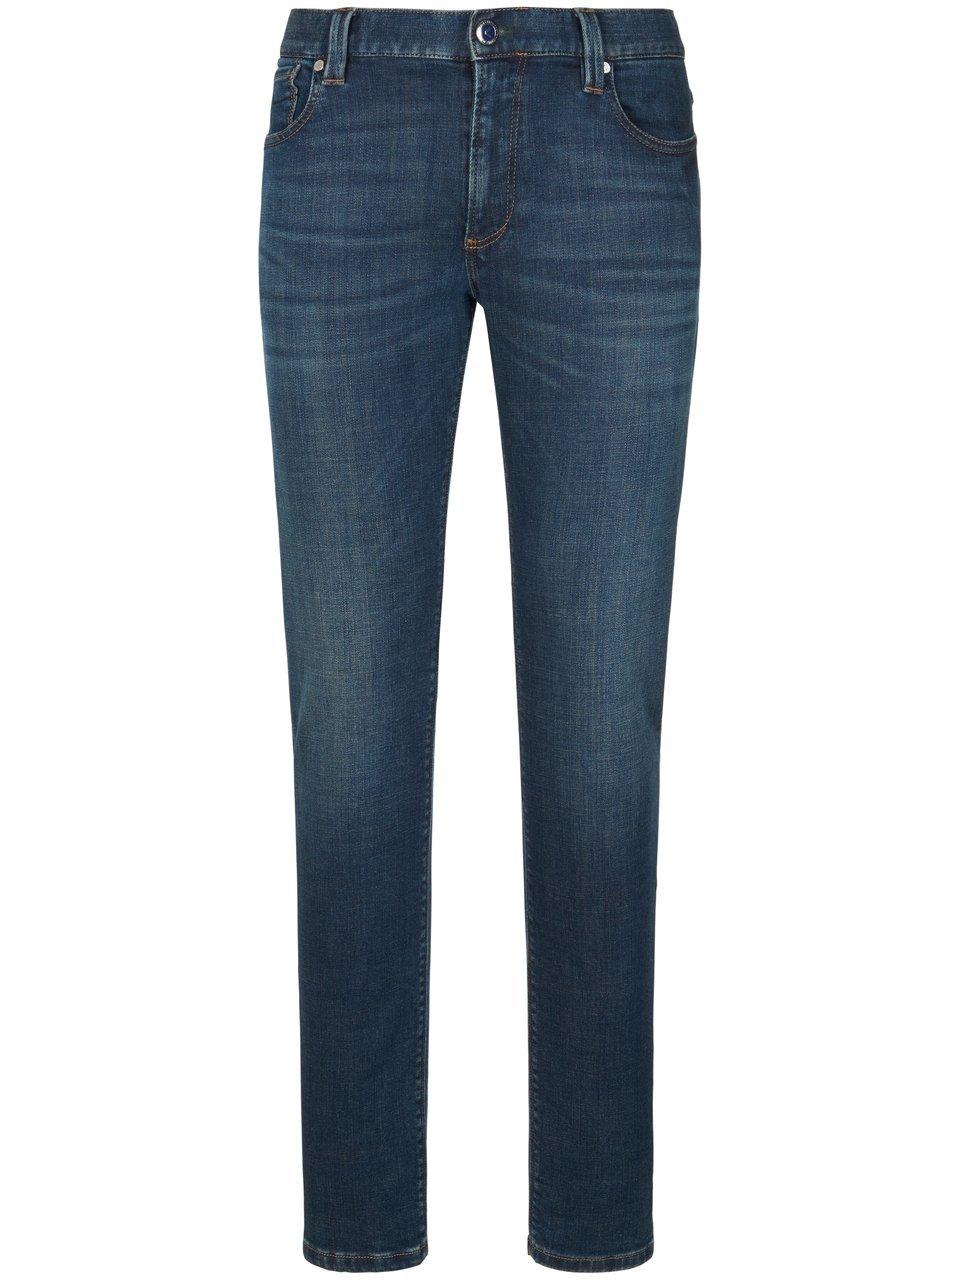 Jeans model Pipe Van Alberto denim